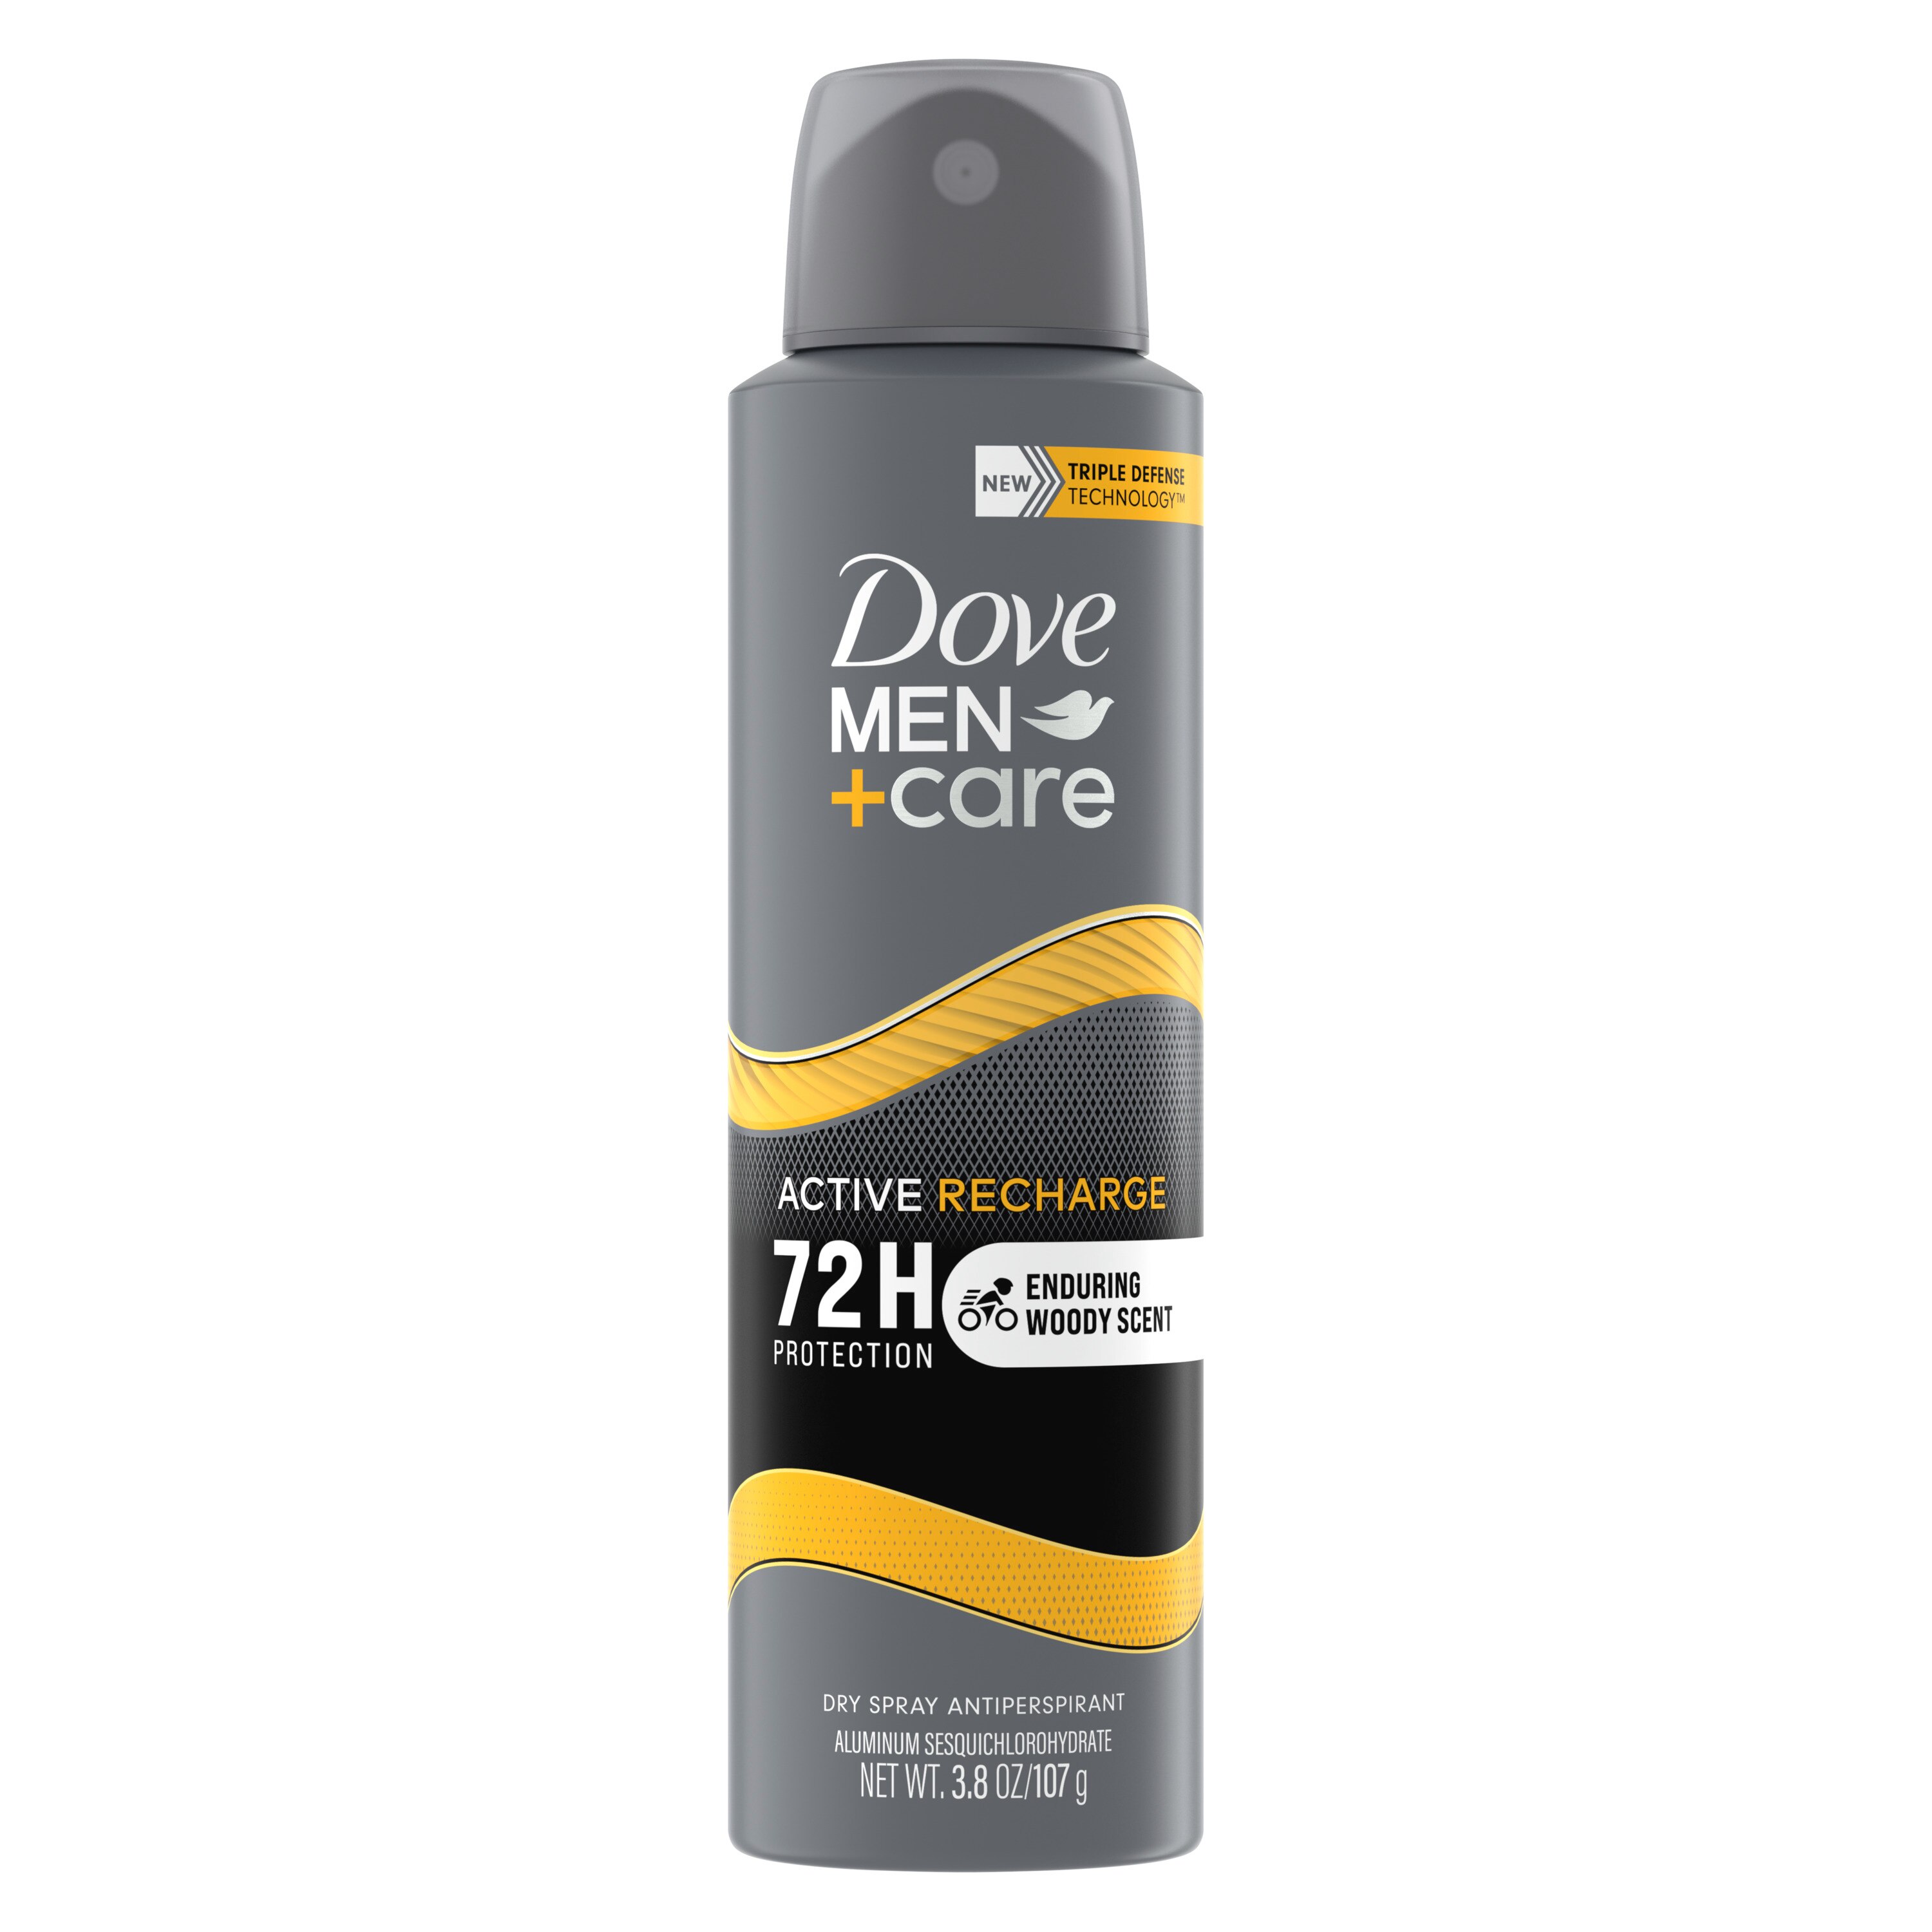 Dove Men+Care 72-Hour Active Recharge Deodorant Dry Spray